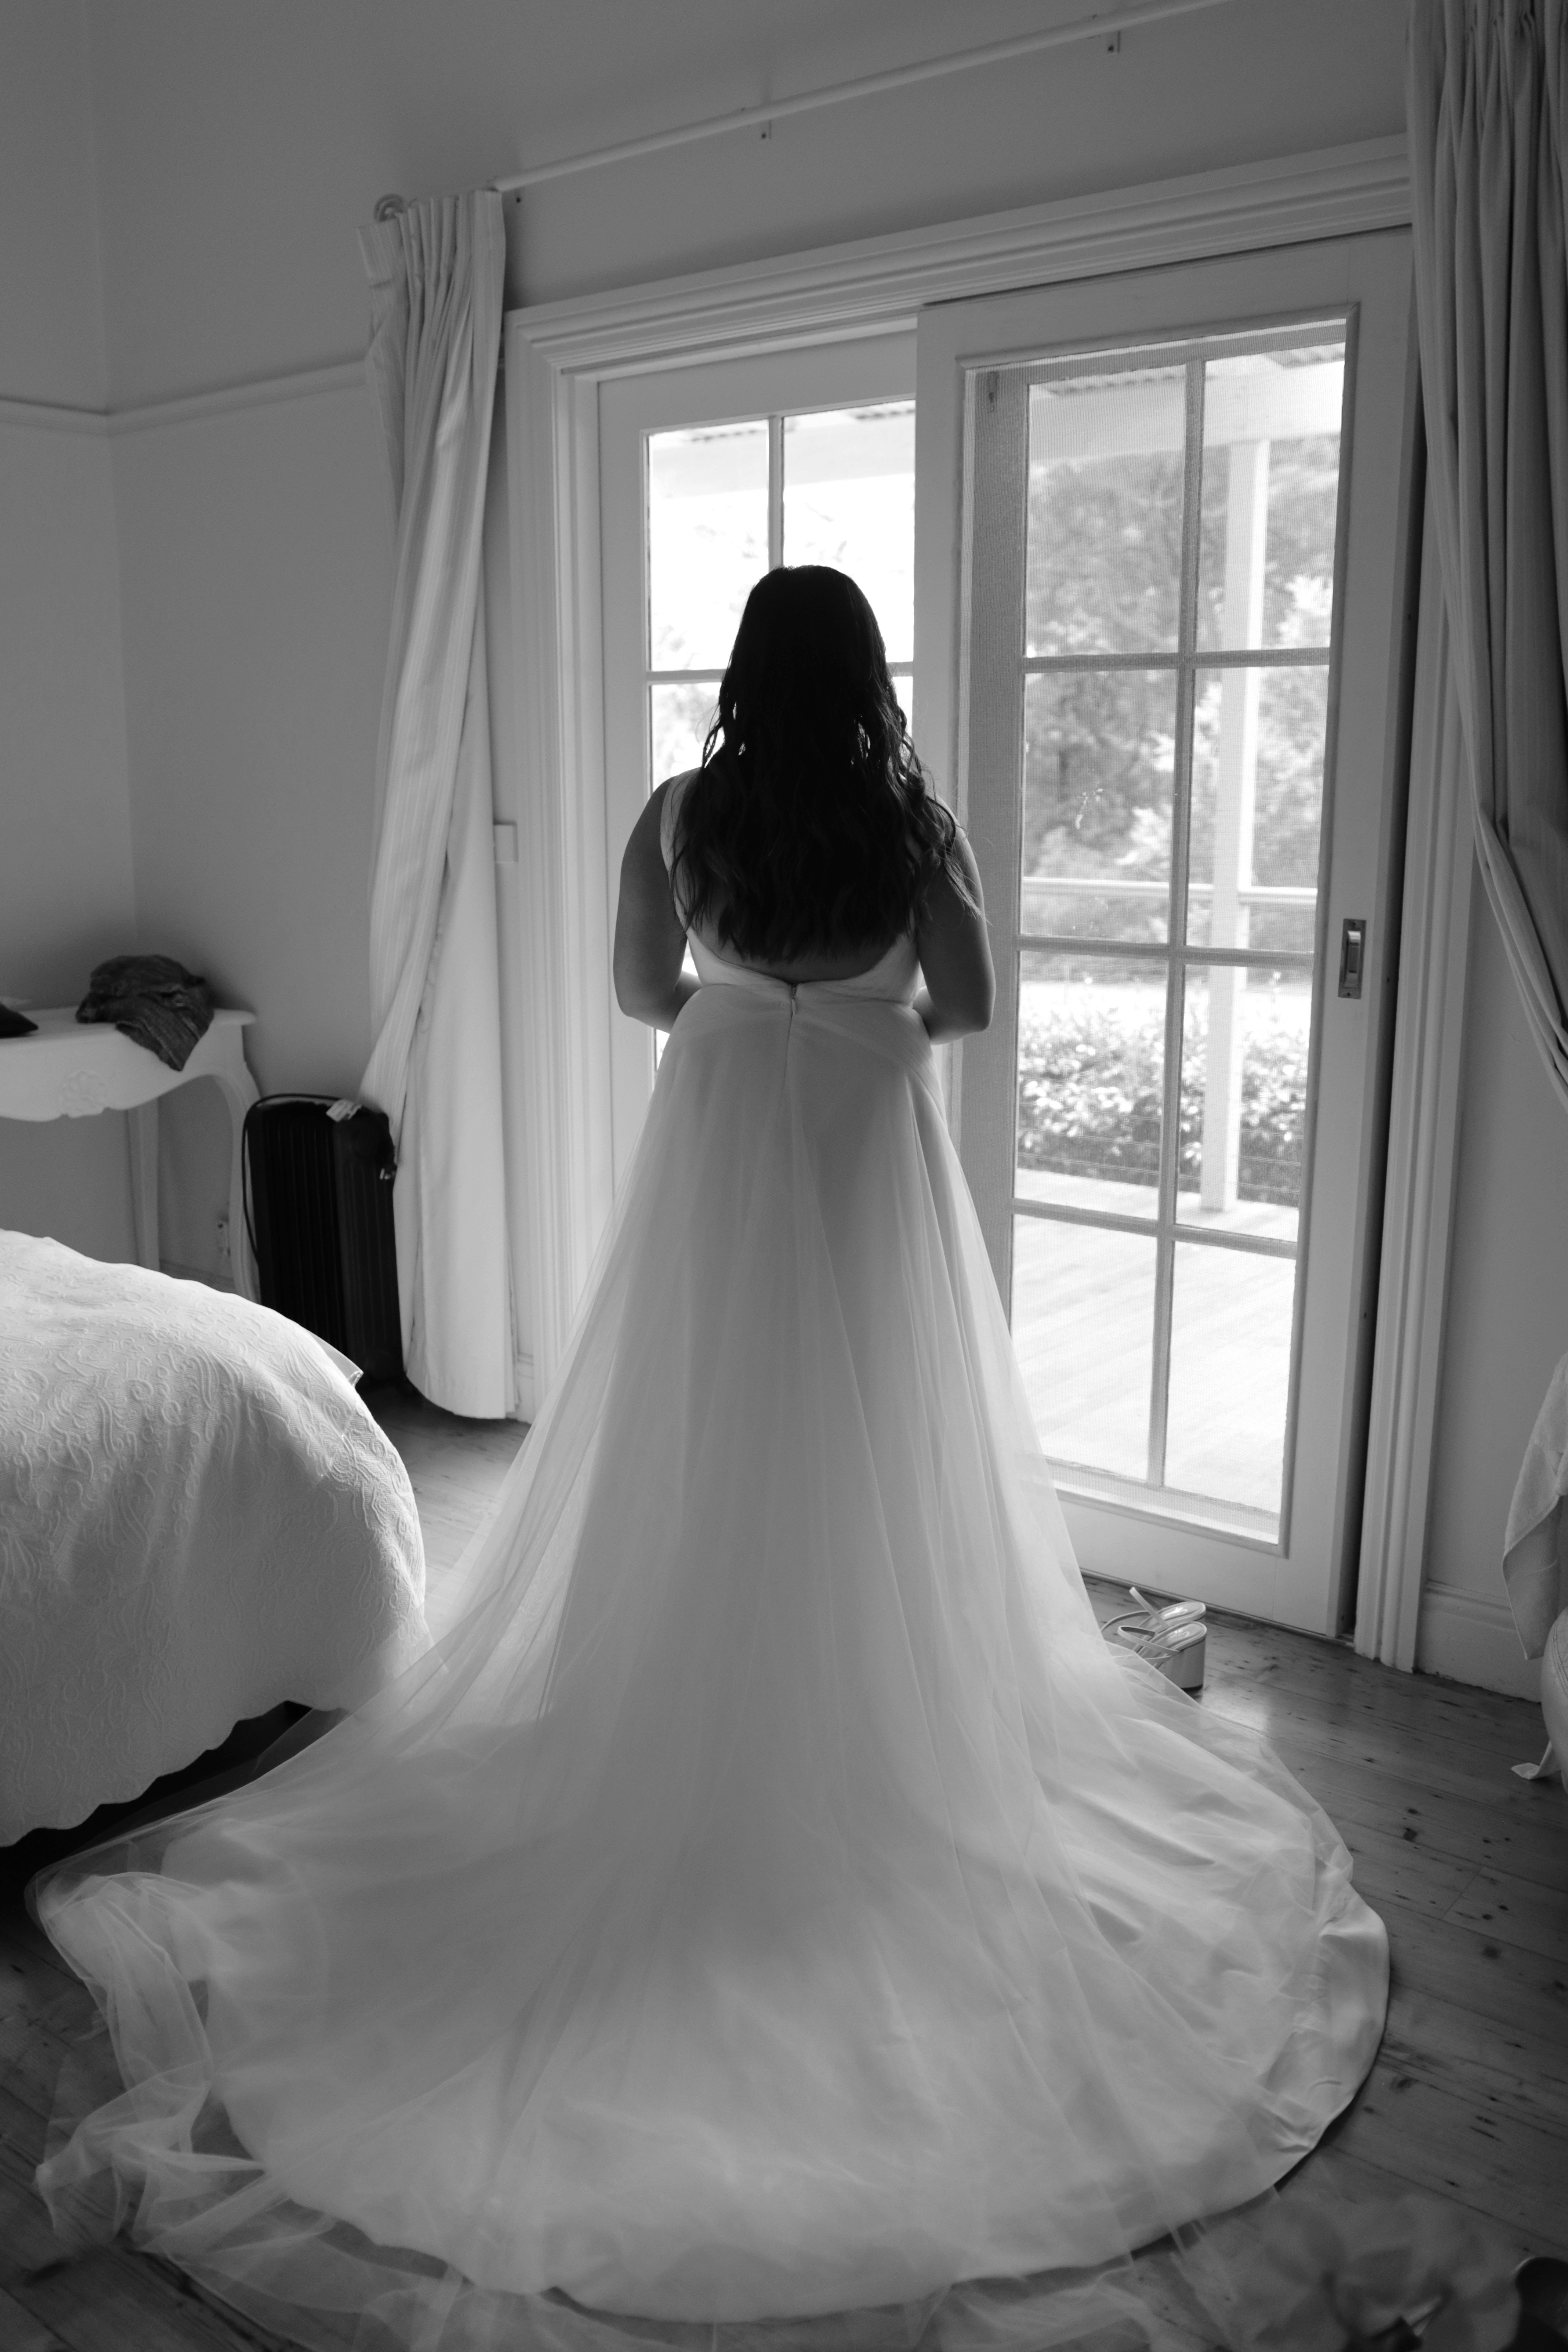 Backshot of a bride in a wedding gown | Source: Unsplash